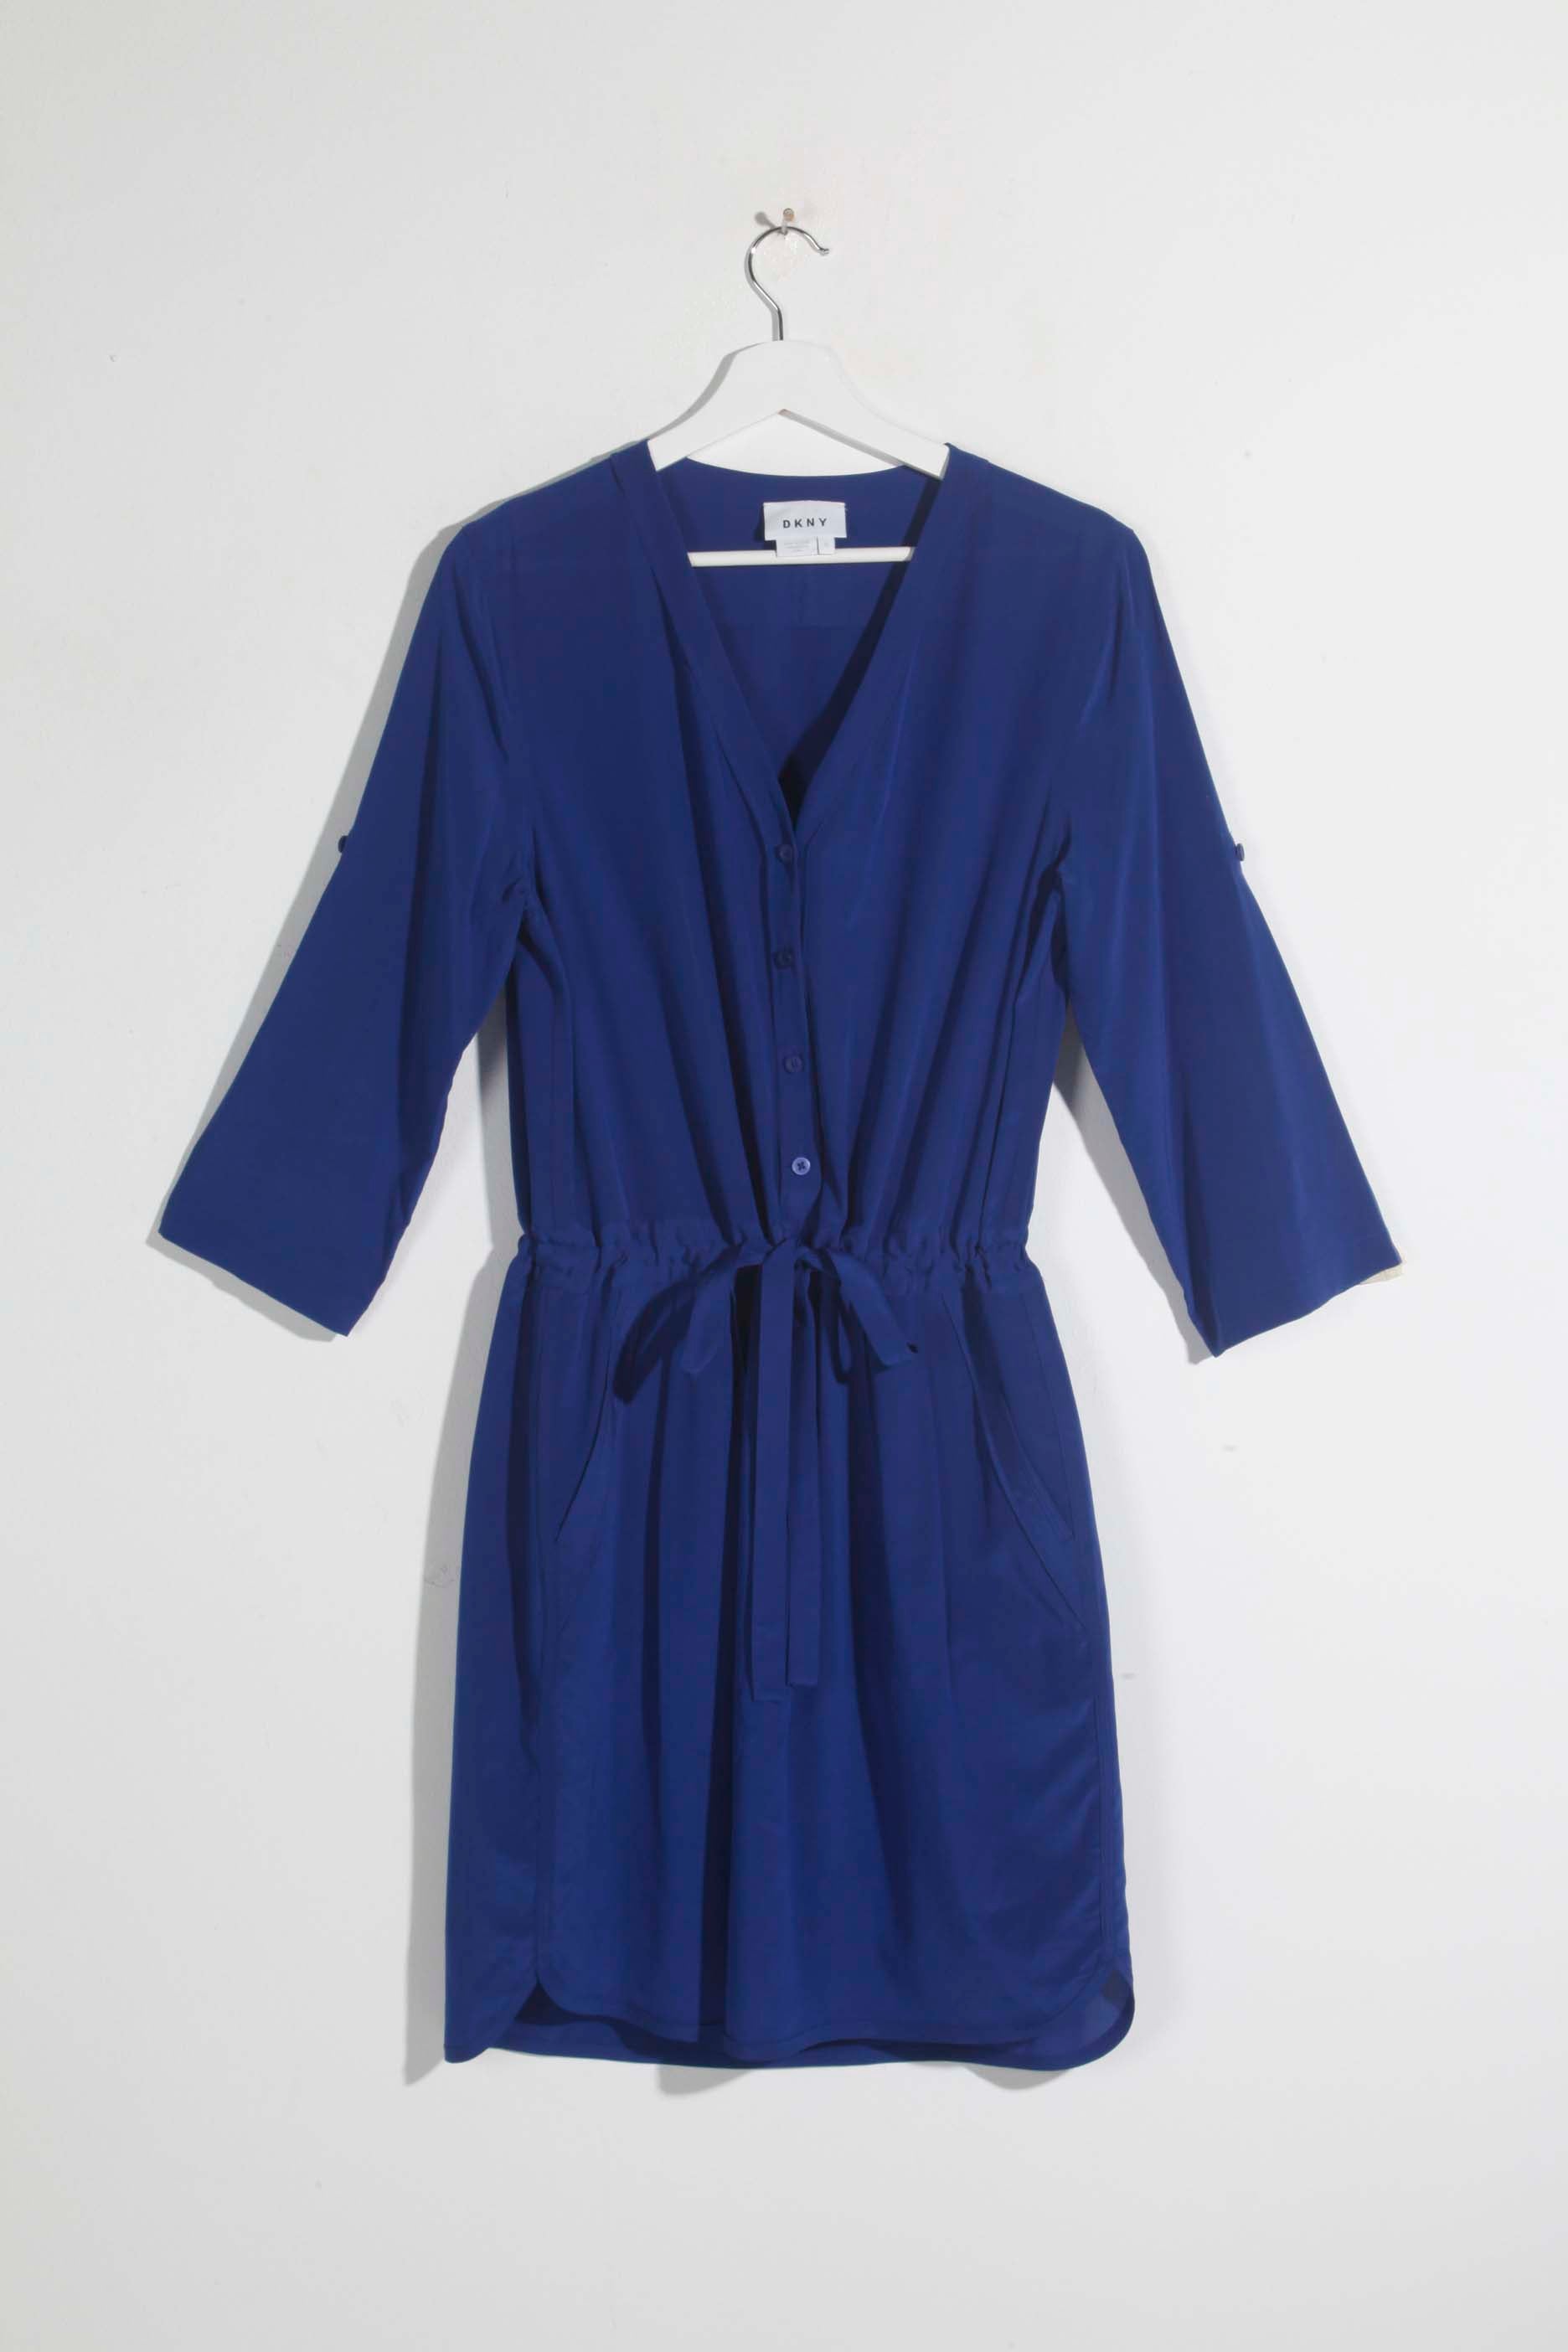 DKNY Blue Shirt Dress Size (EU38-40)